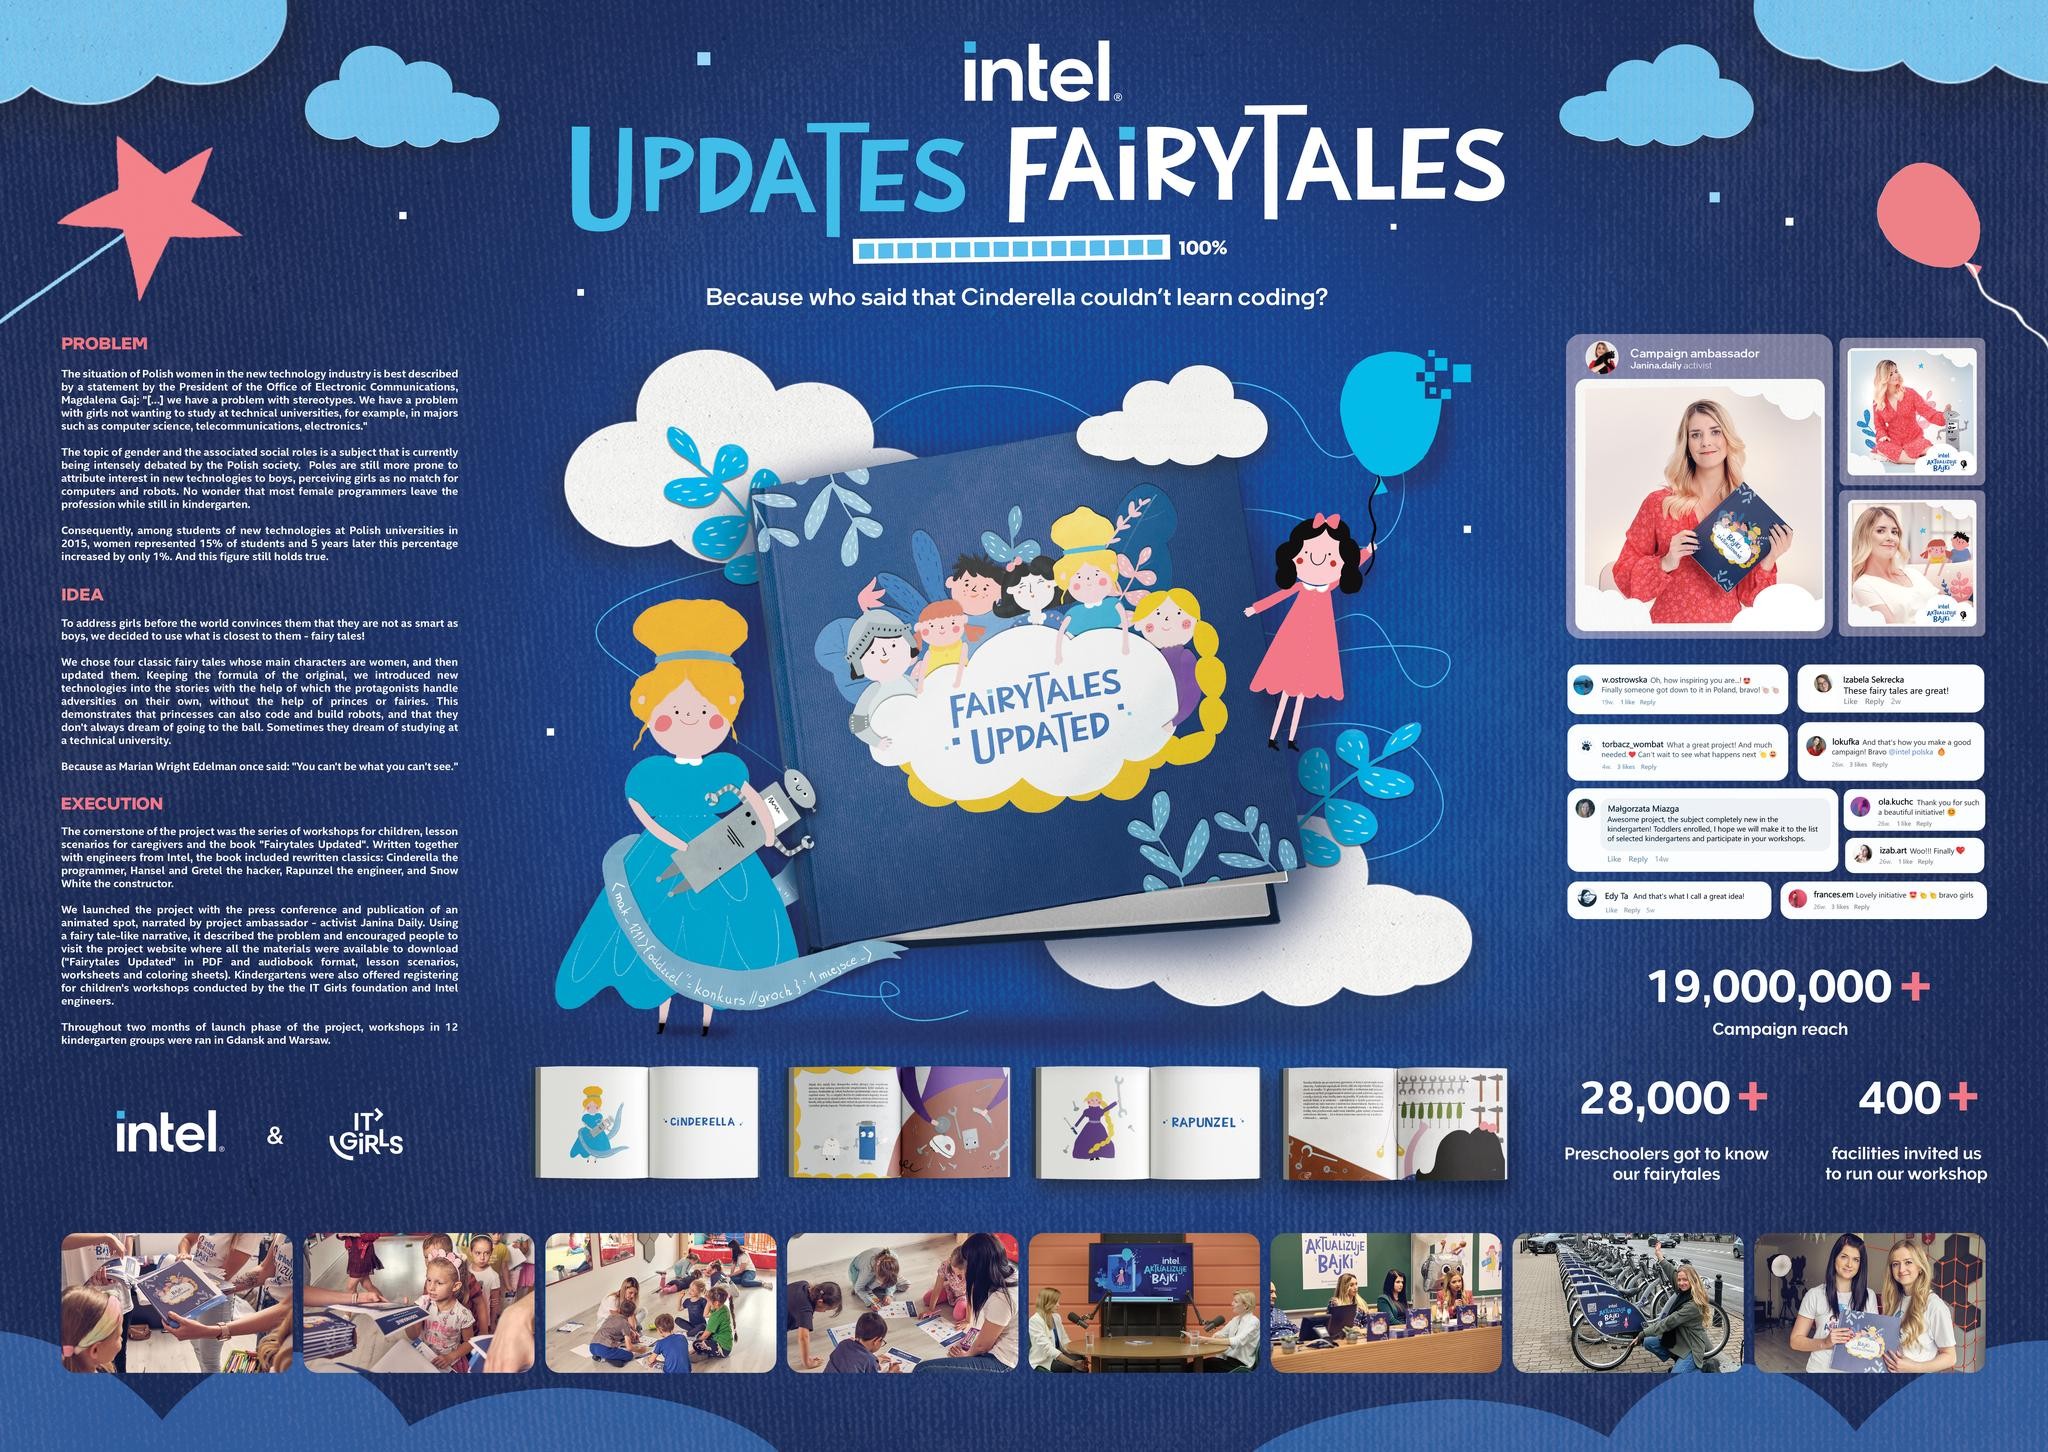 Intel Updates Fairytales